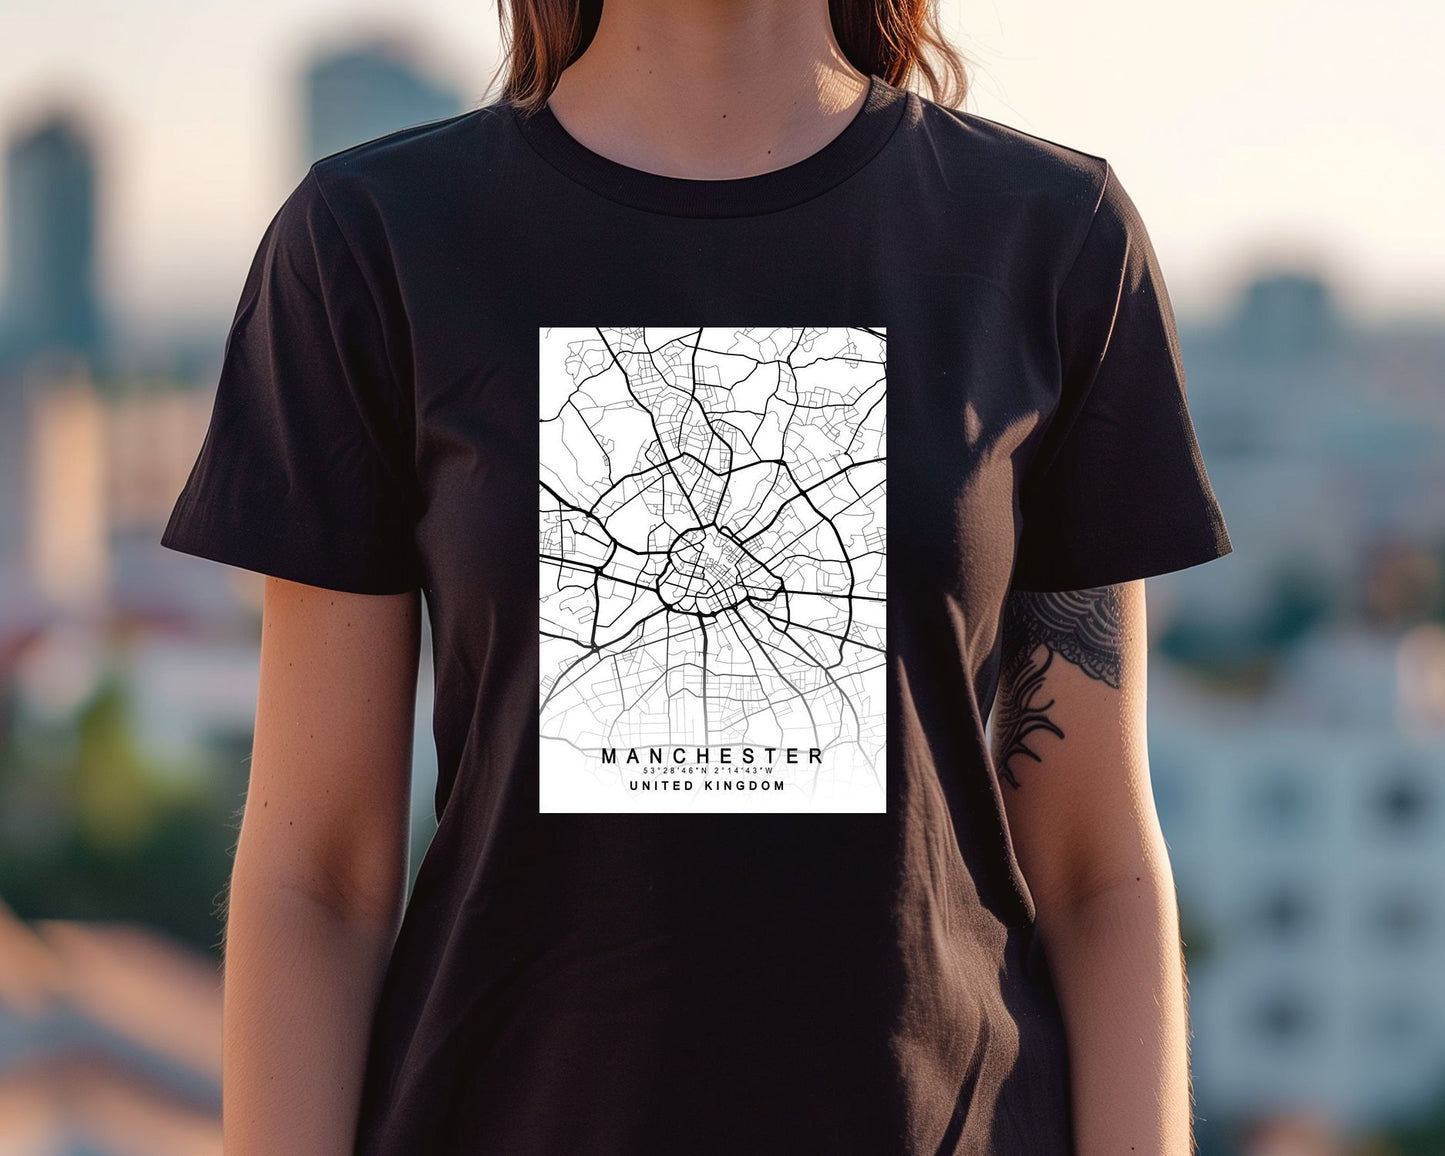 Manchester Map White - @GreyArt